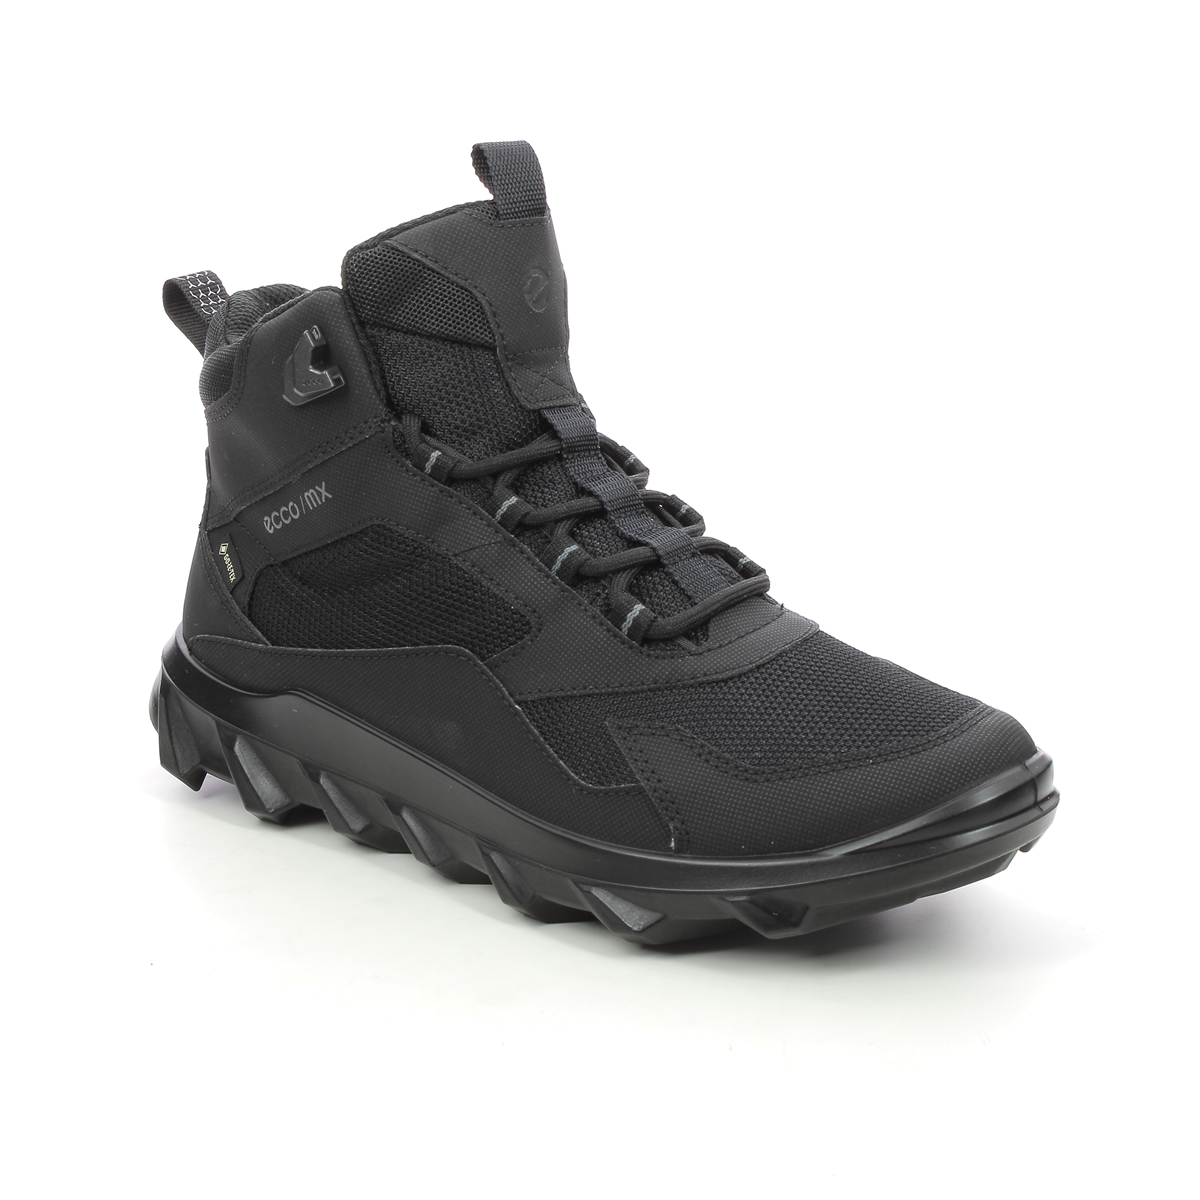 Ecco Mx Boot Gtx W Black Womens Walking Boots 820223-51052 In Size 40 In Plain Black